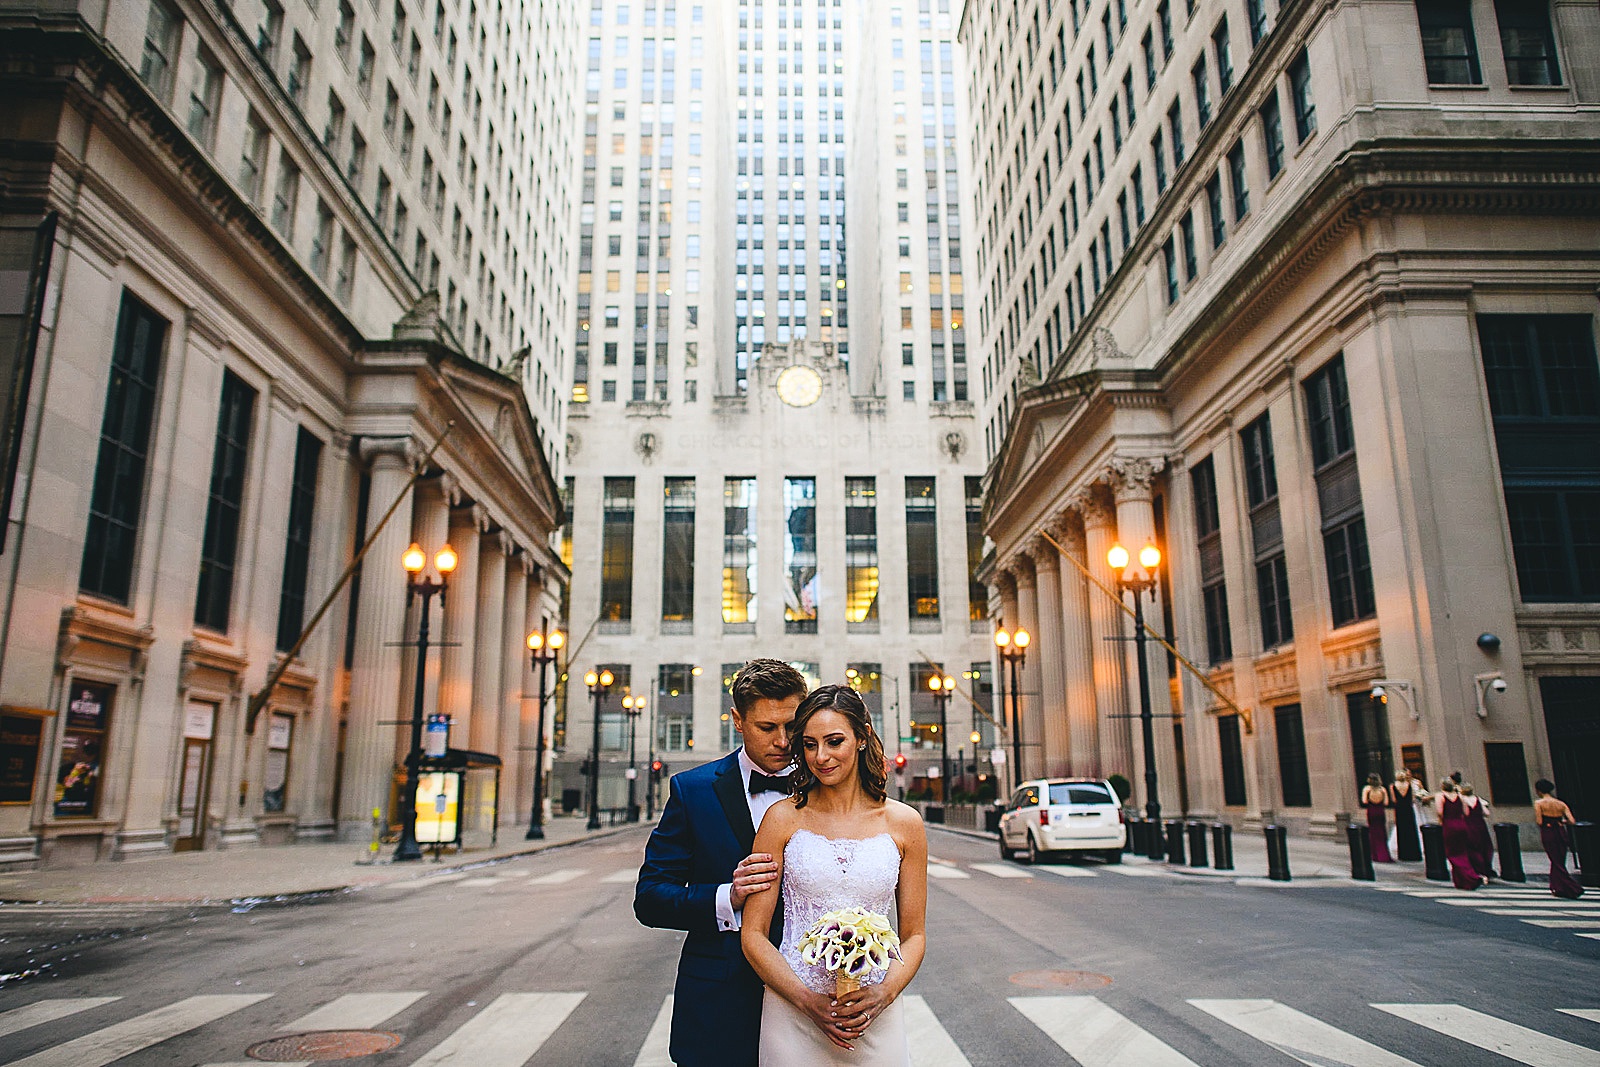 15 w city center chicago hotel wedding photos - The Wedding of Lani & Ross at W City Center in Chicago